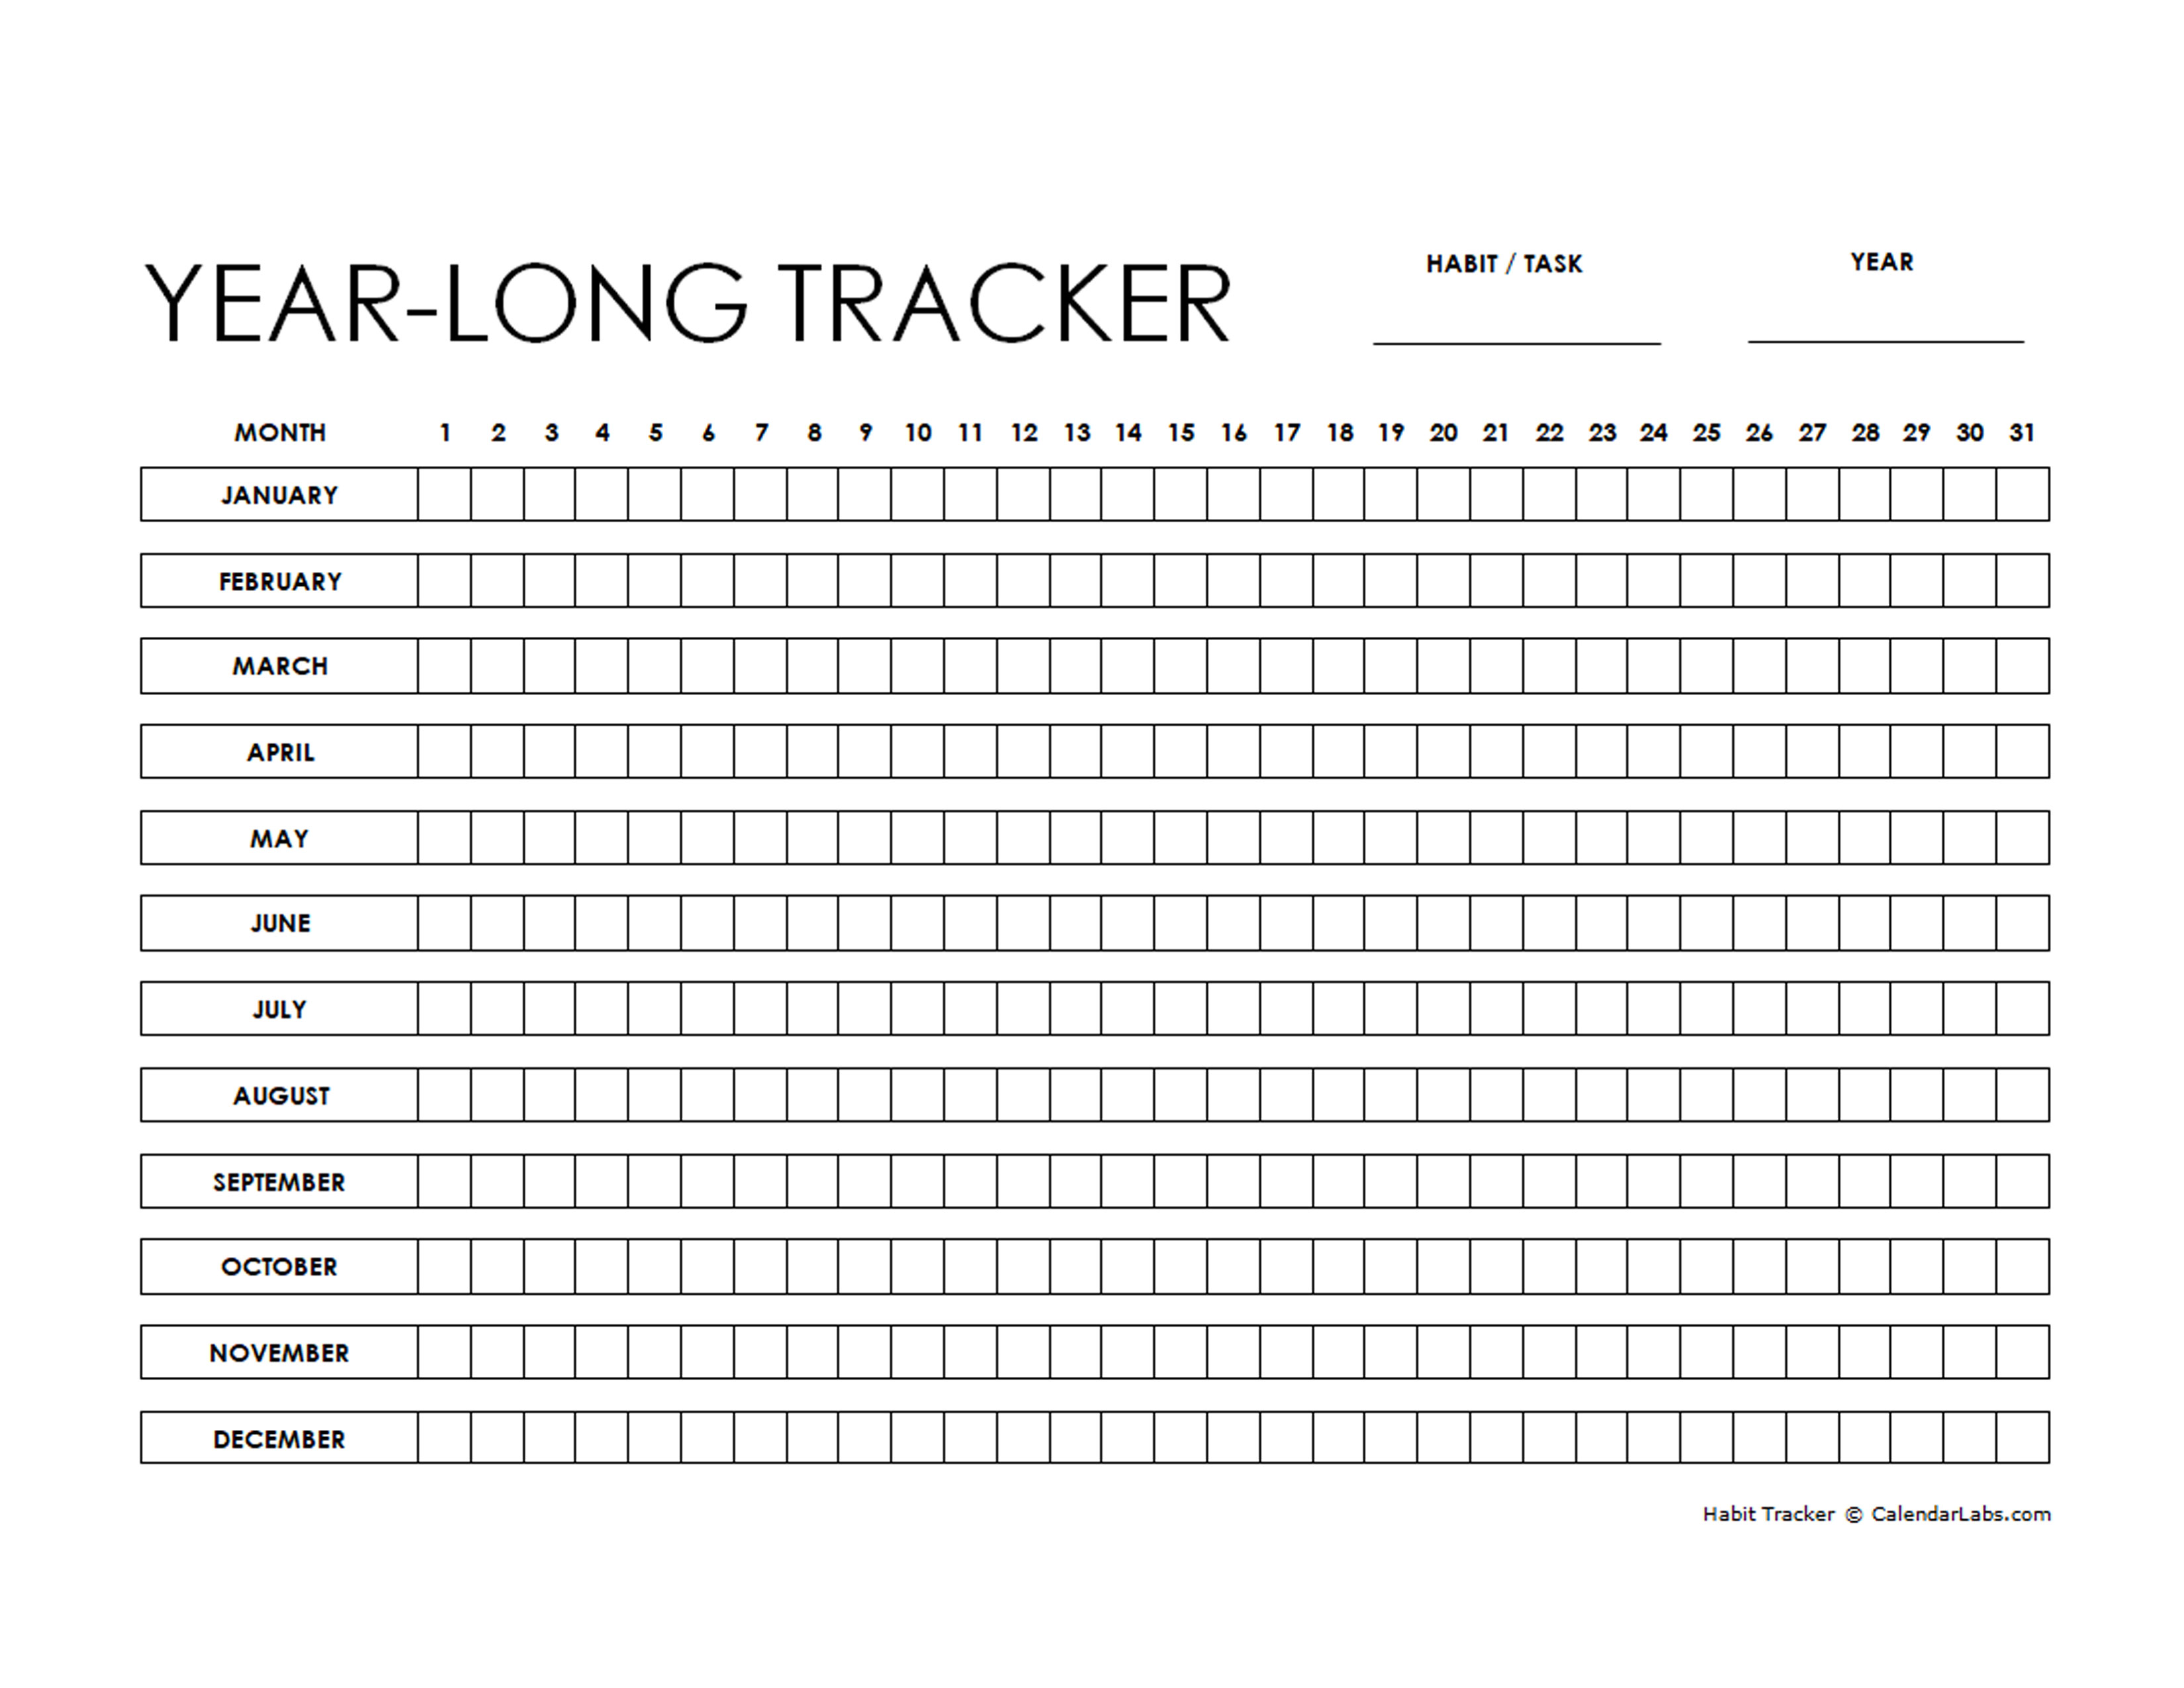 yearly-habit-tracker-printable-free